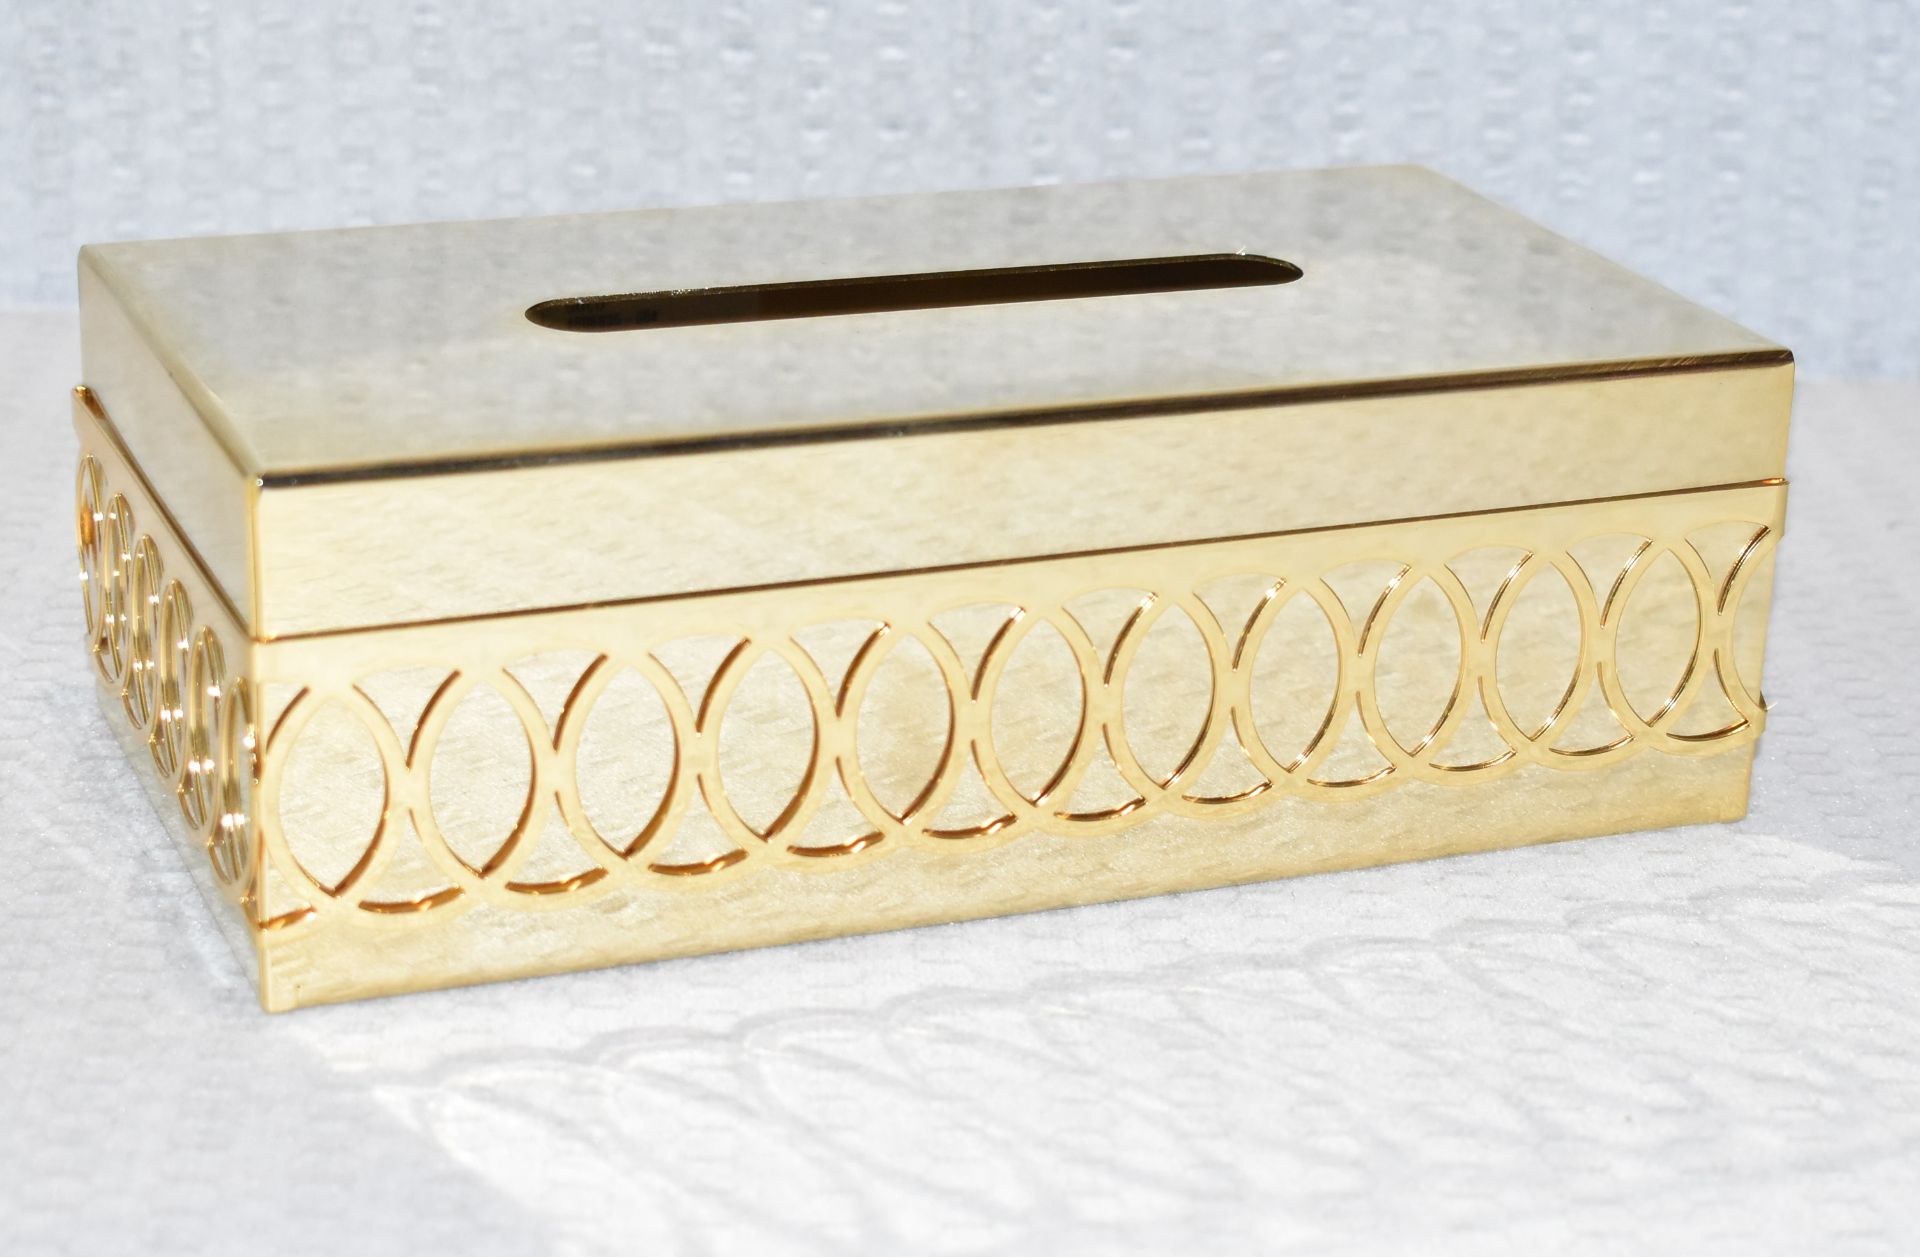 1 x VILLARI 'Hiroito' Luxury Italian Made Gold-Plated Tissue Box Cover - Original Price £579.00 - Image 2 of 6